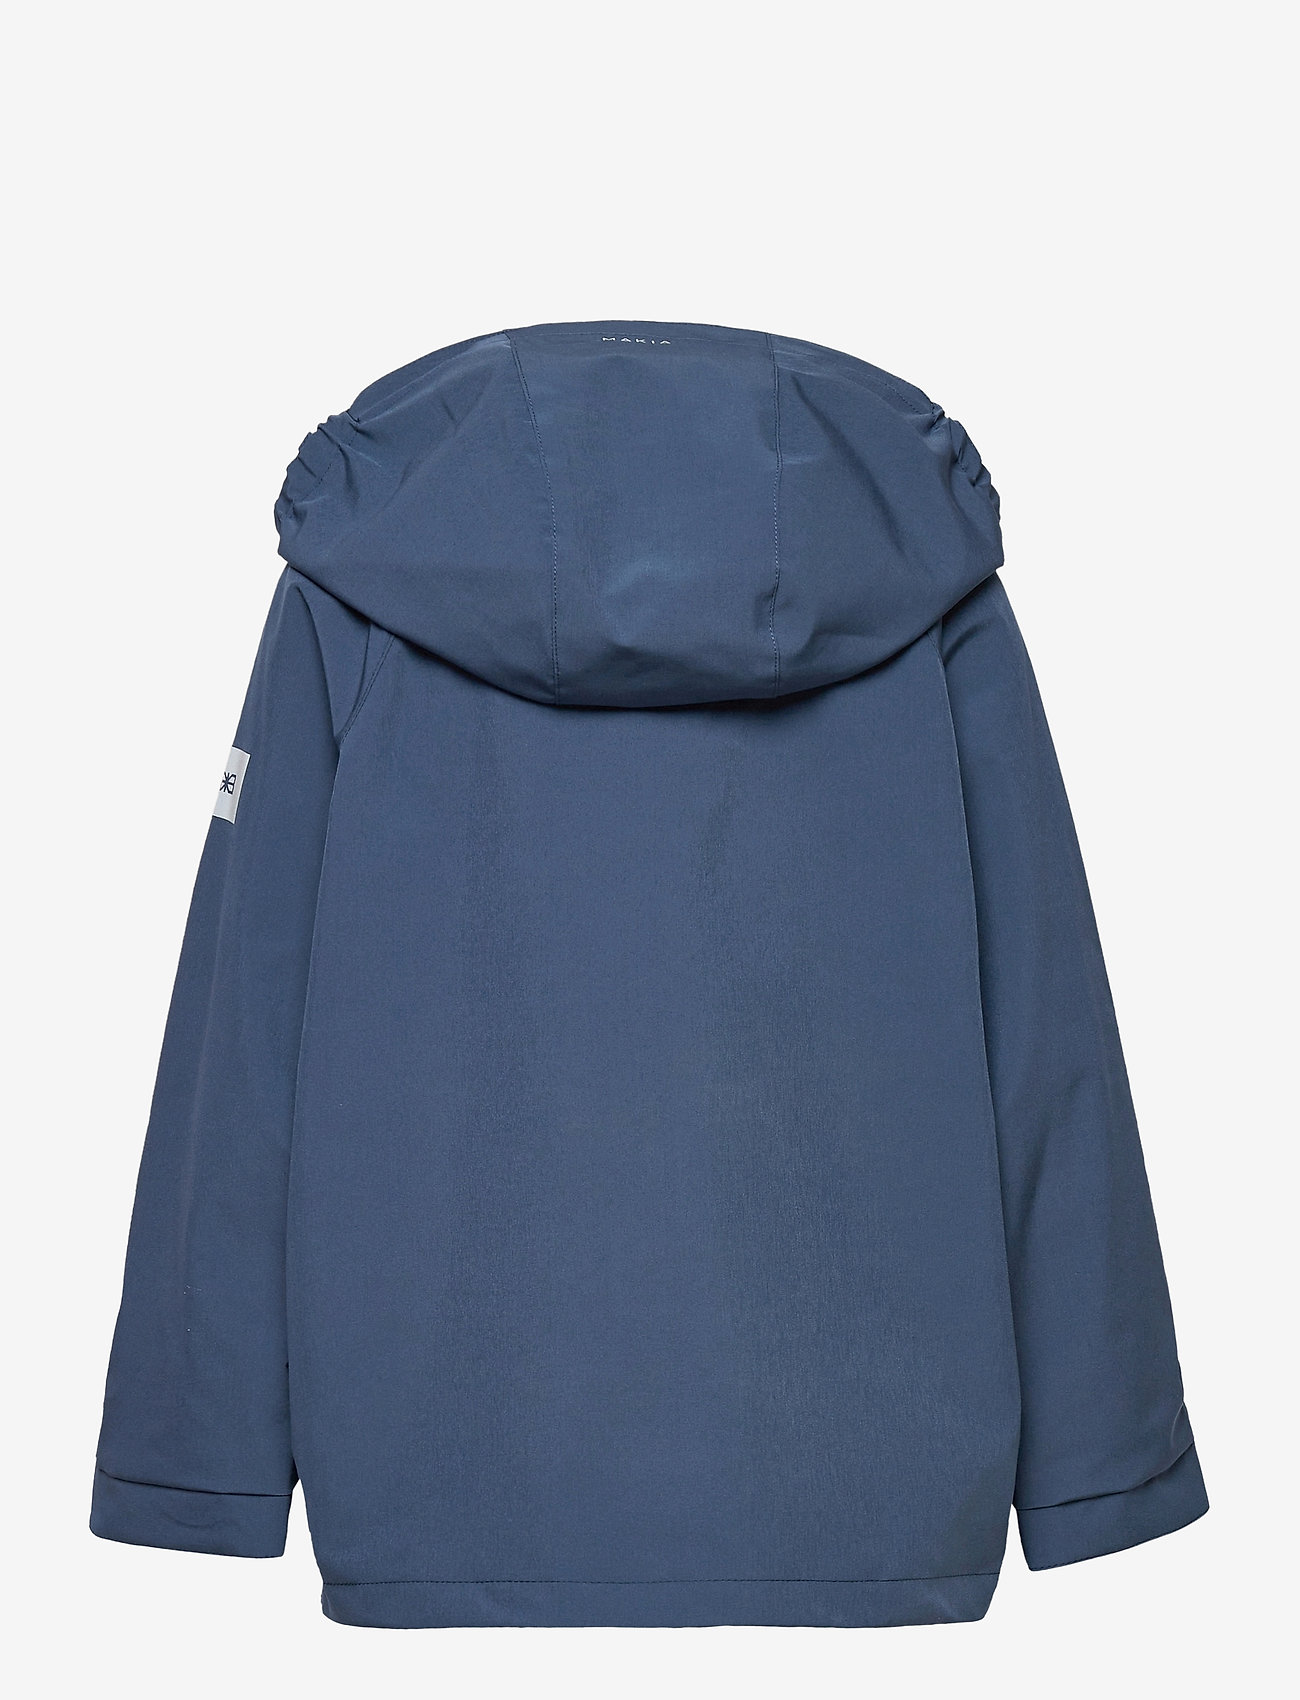 Makia - Chrono Jacket - spring jackets - vintage indigo - 1